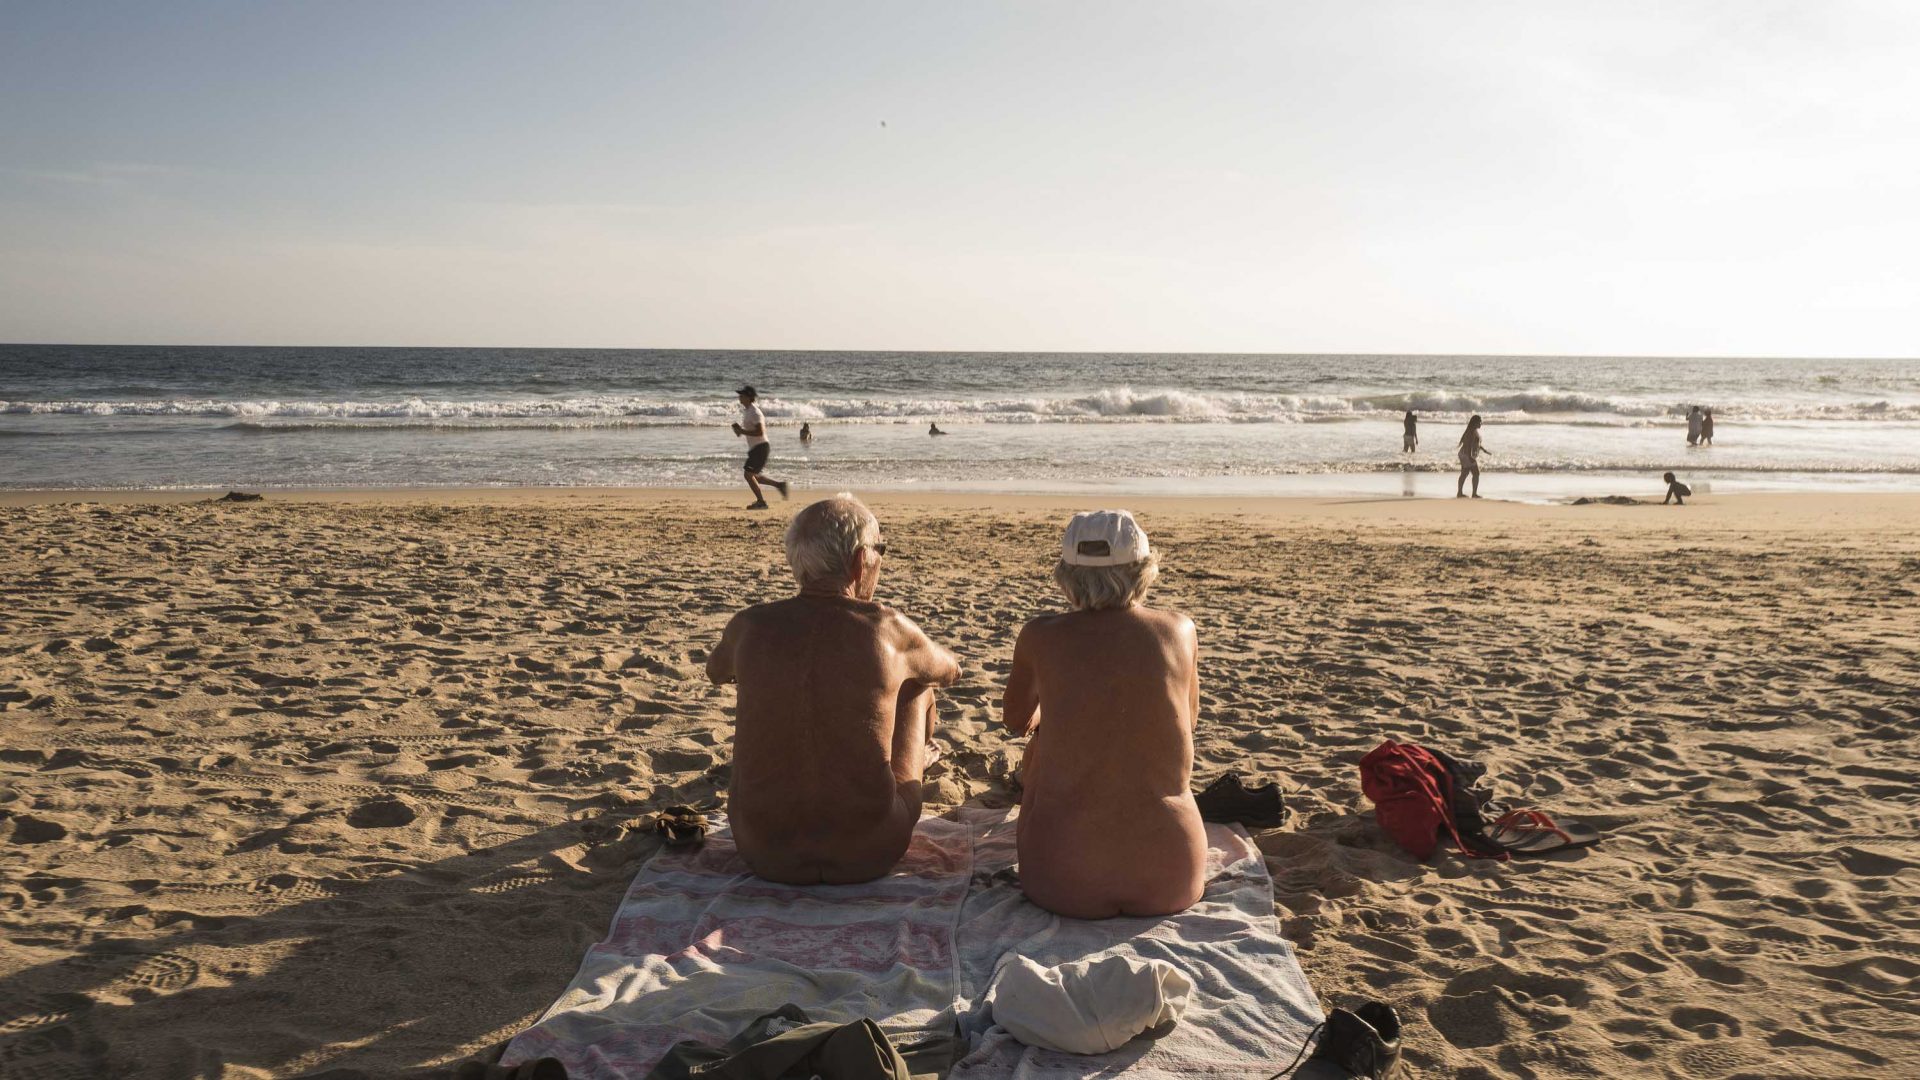 daniel germanotta recommends black guy nude beach pic